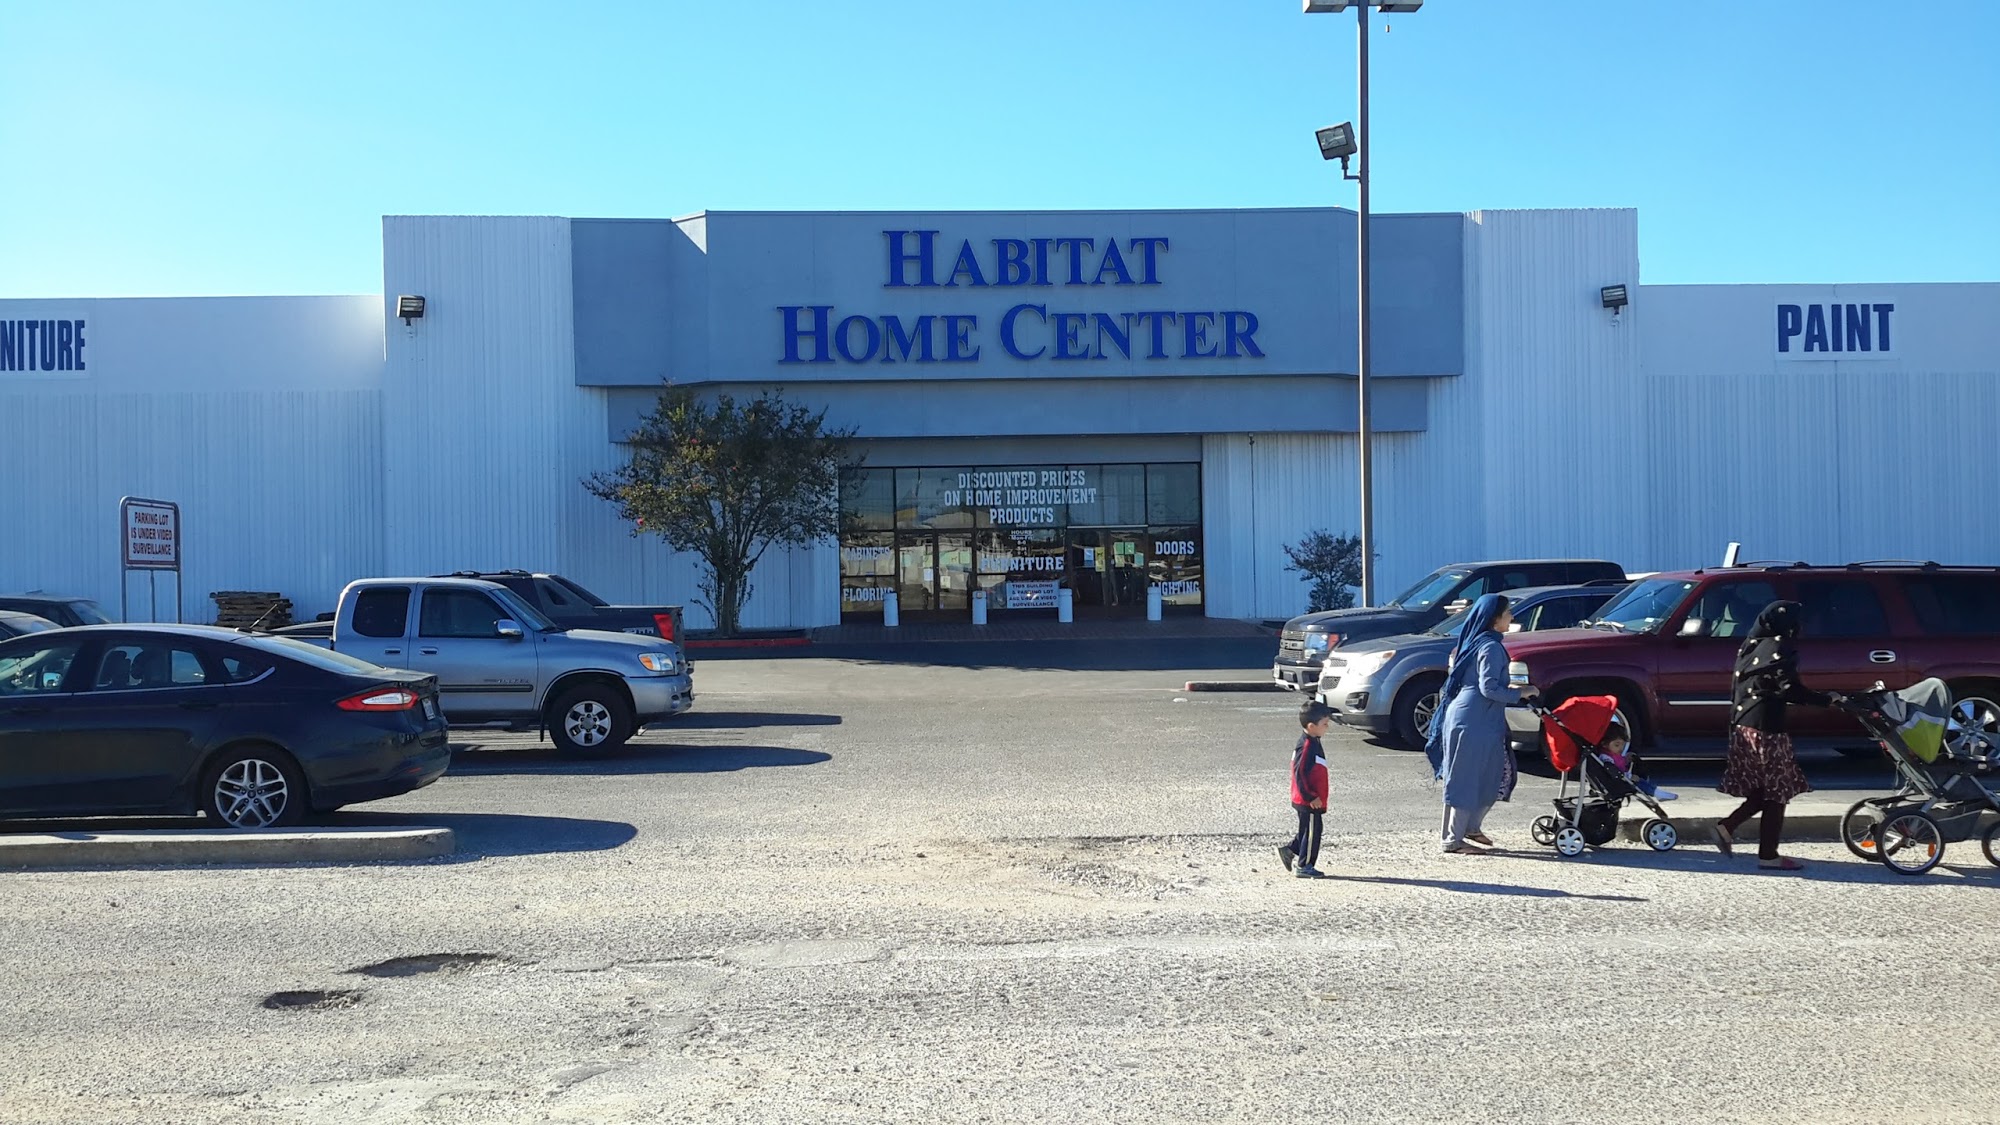 Habitat Home Center